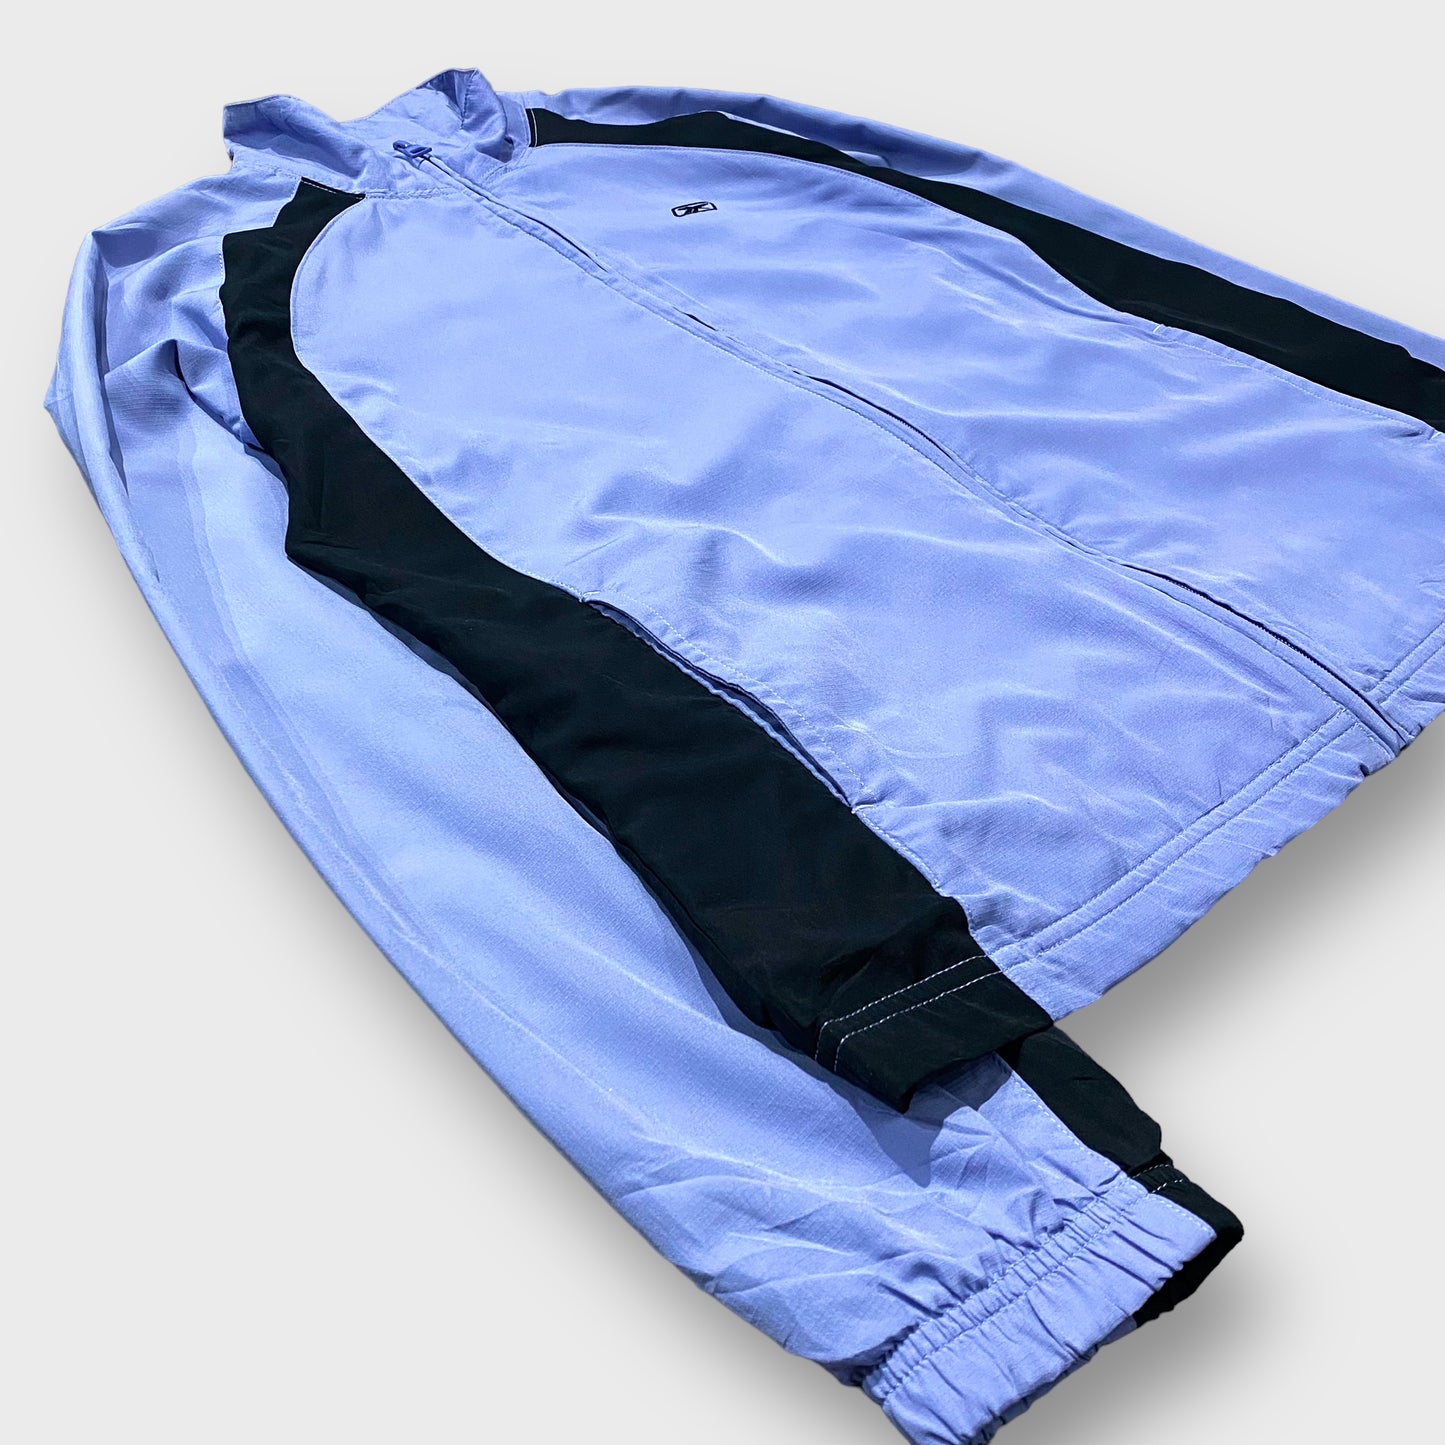 "REEBOK" Zip up nylon jacket